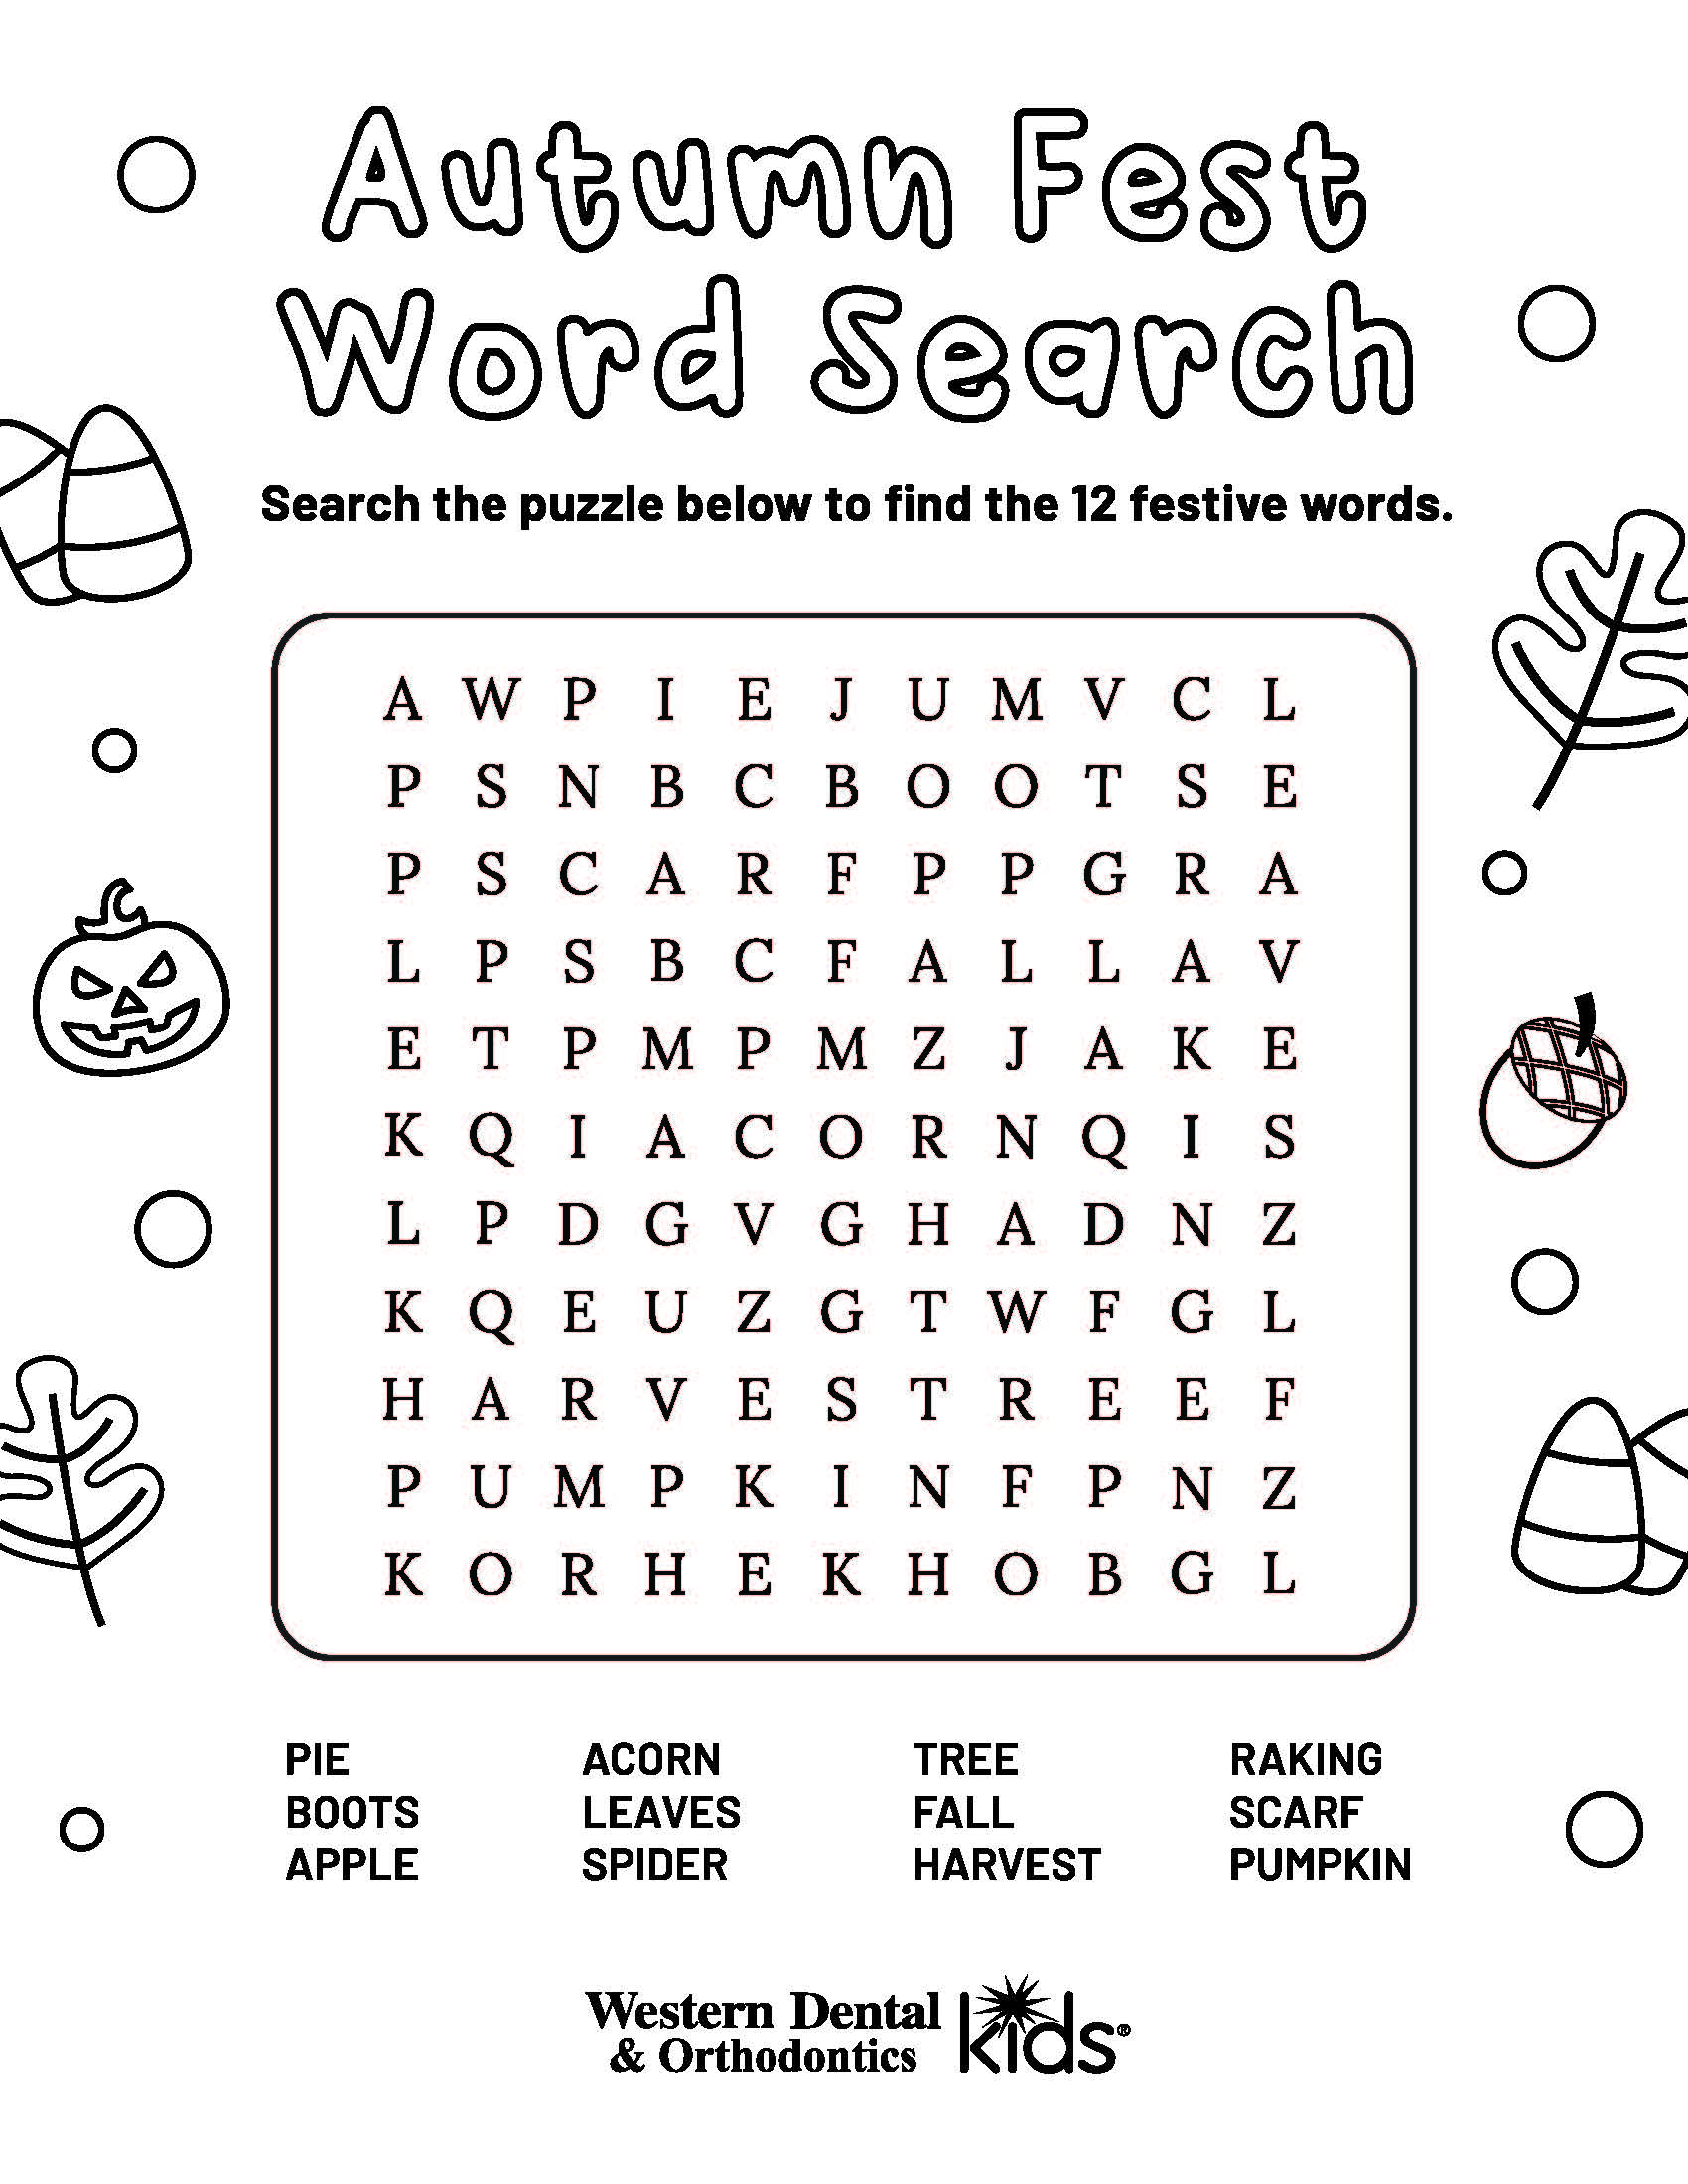 Western Dental Kid's Word Search - Fall 2022